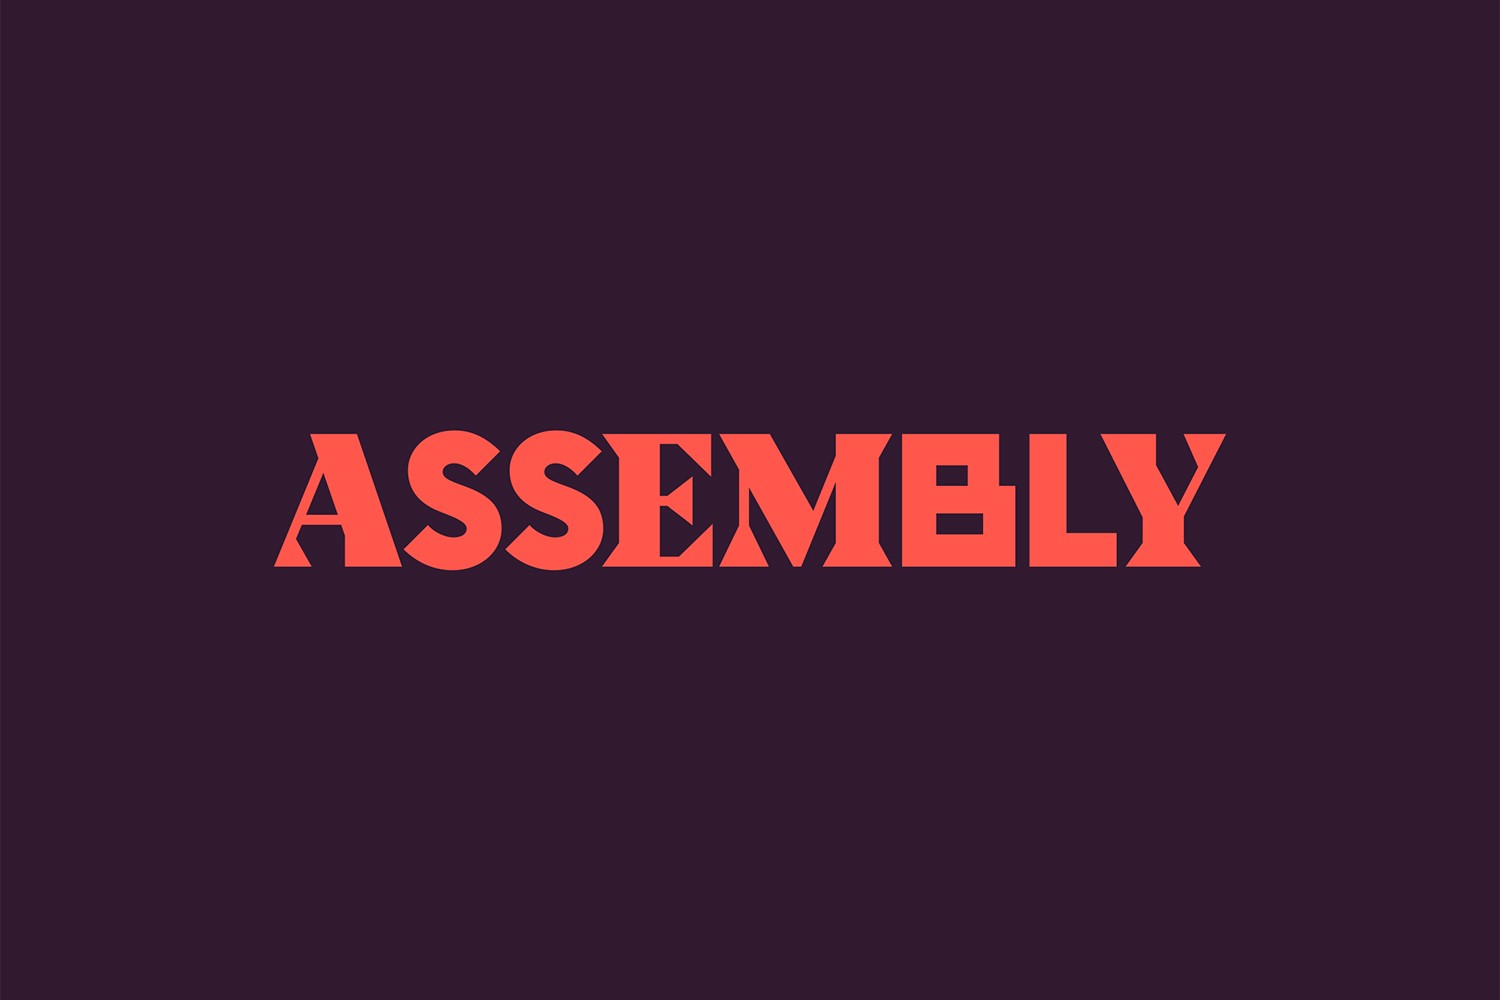 03-assembly-branding-hotel-logotype-ragged-edge-london-uk-bpo.jpg